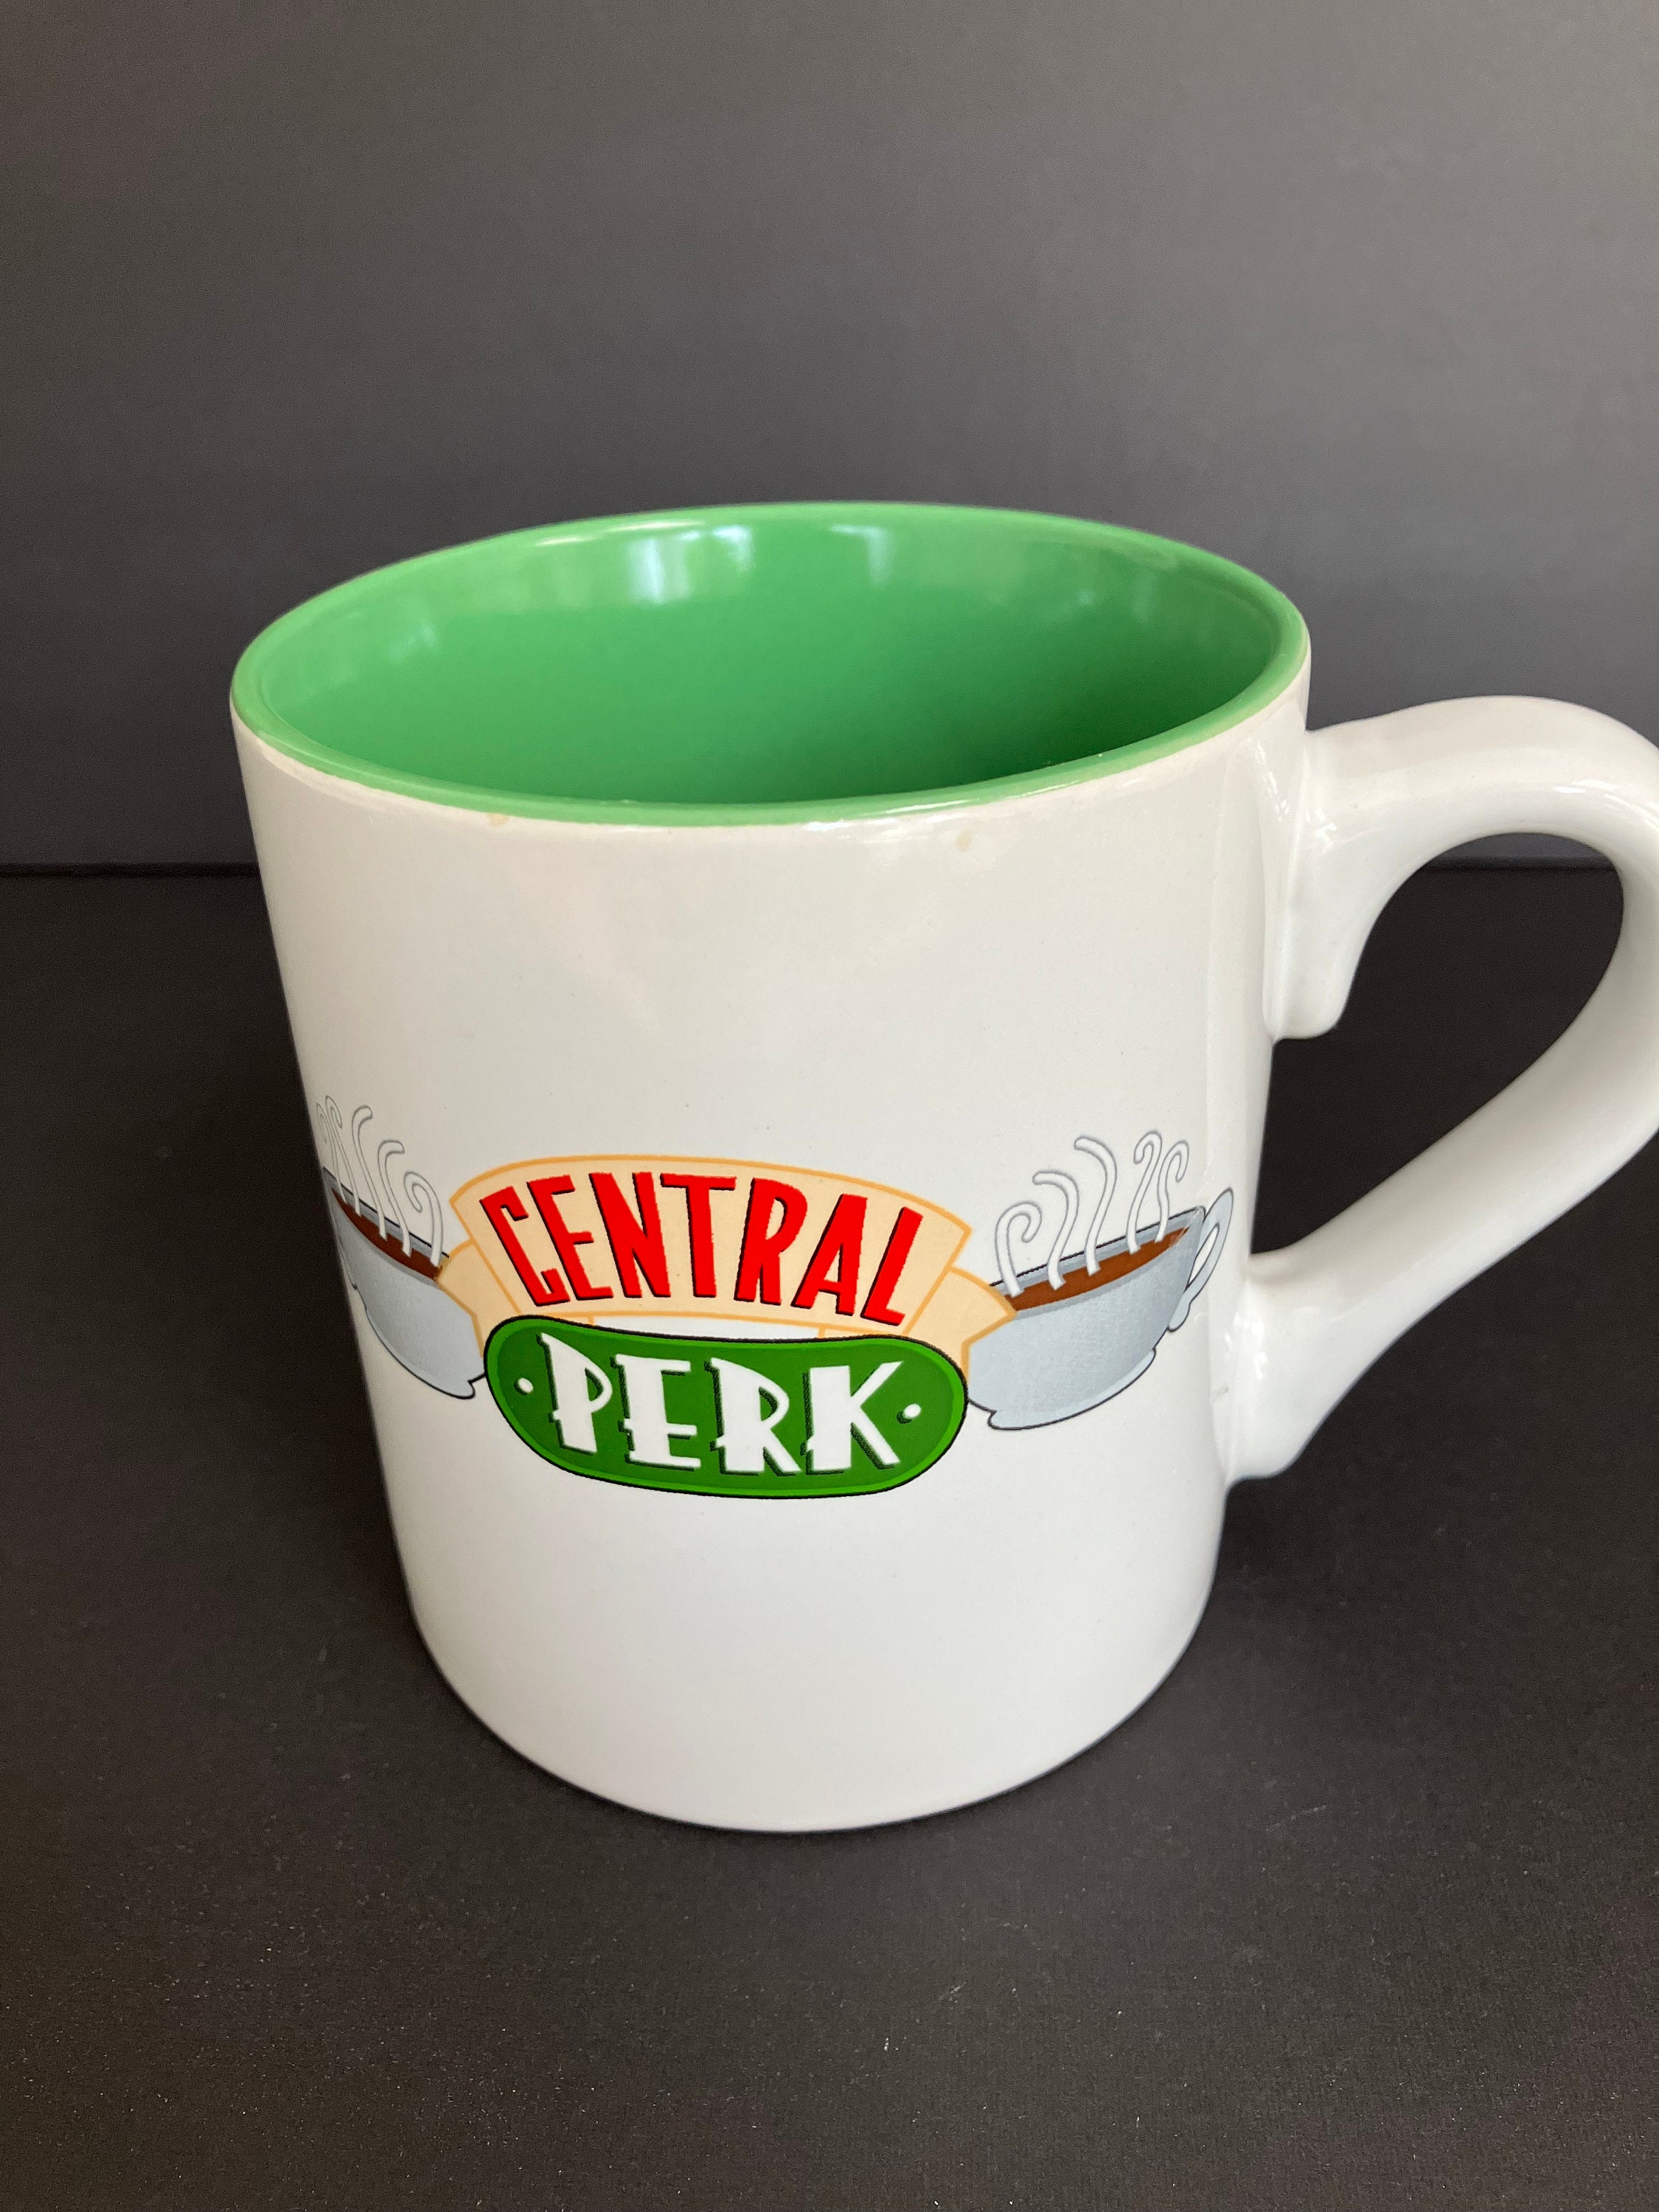 Friends Central Perk Glass Mug And Tea Infuser Gift Set